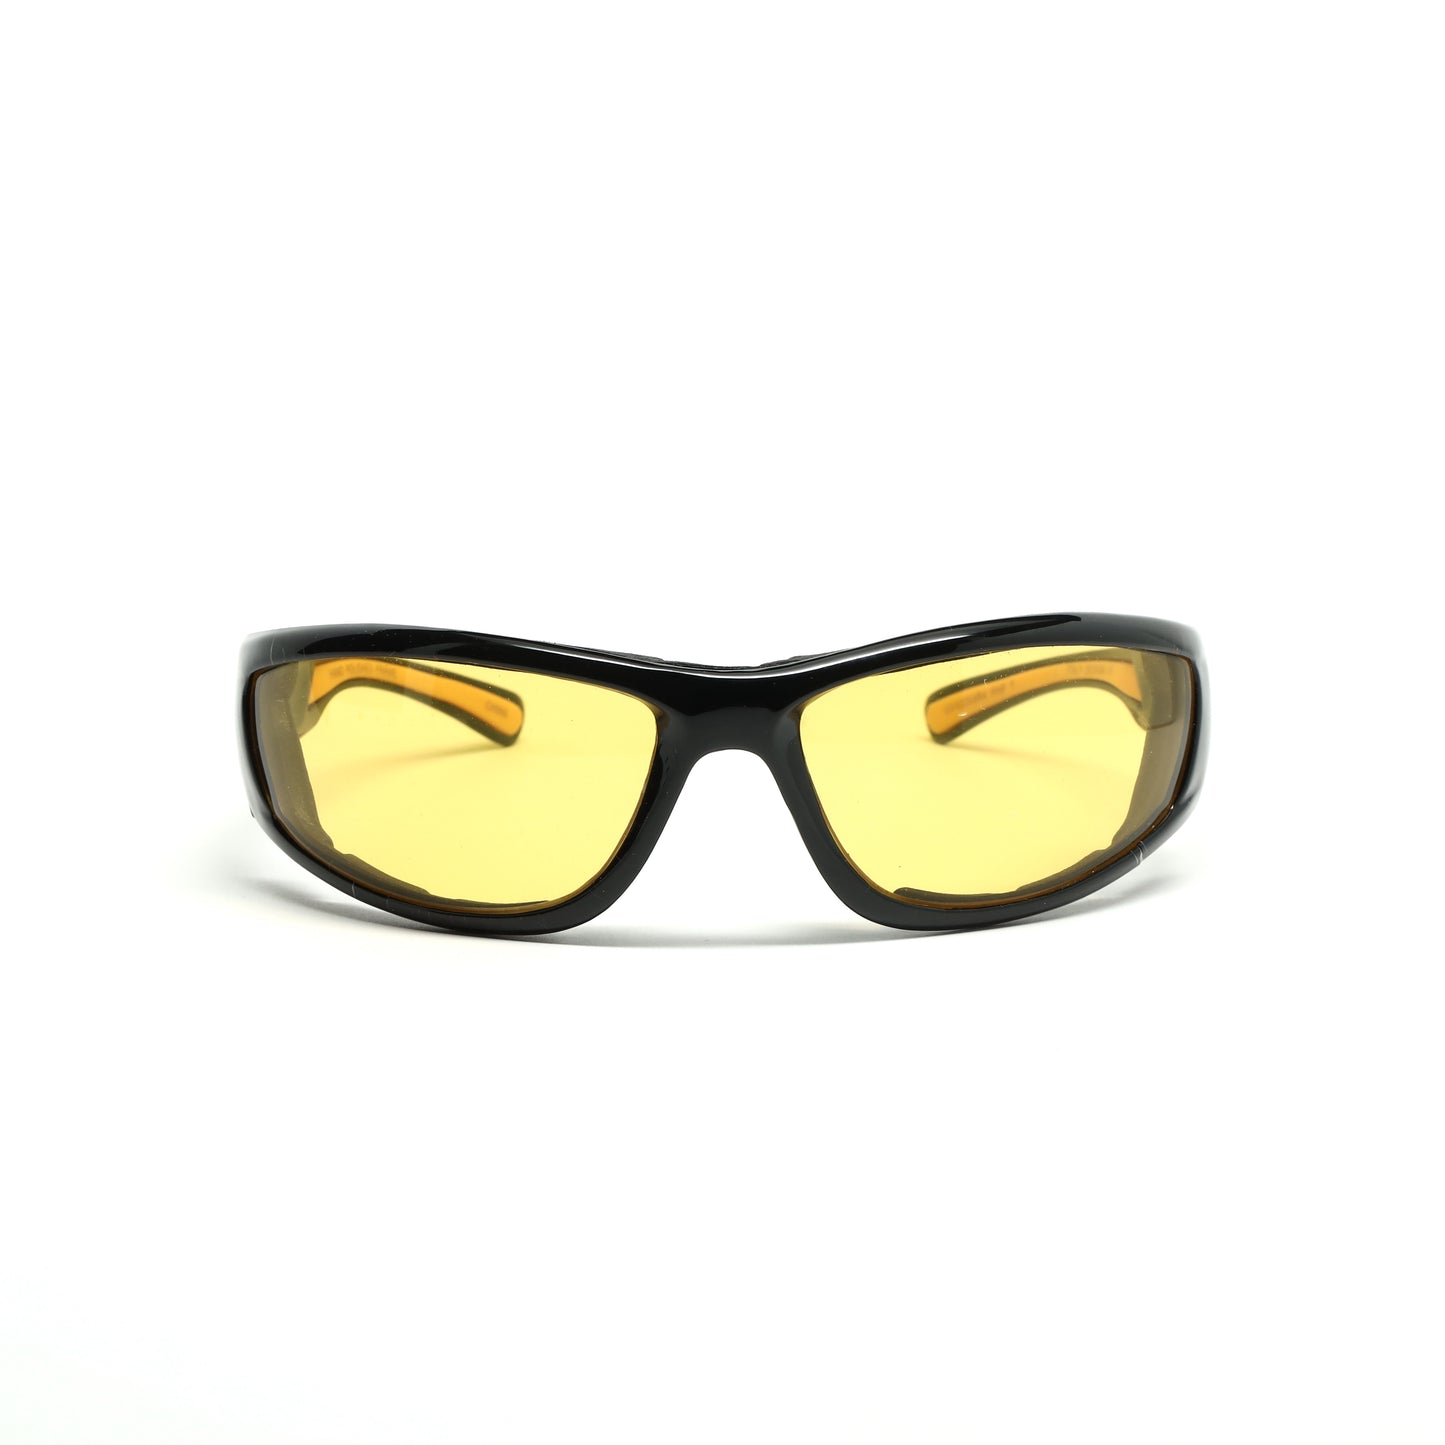 //Contender// Foam Lined Nightvision Oversized Visor Sunglasses - Yellow